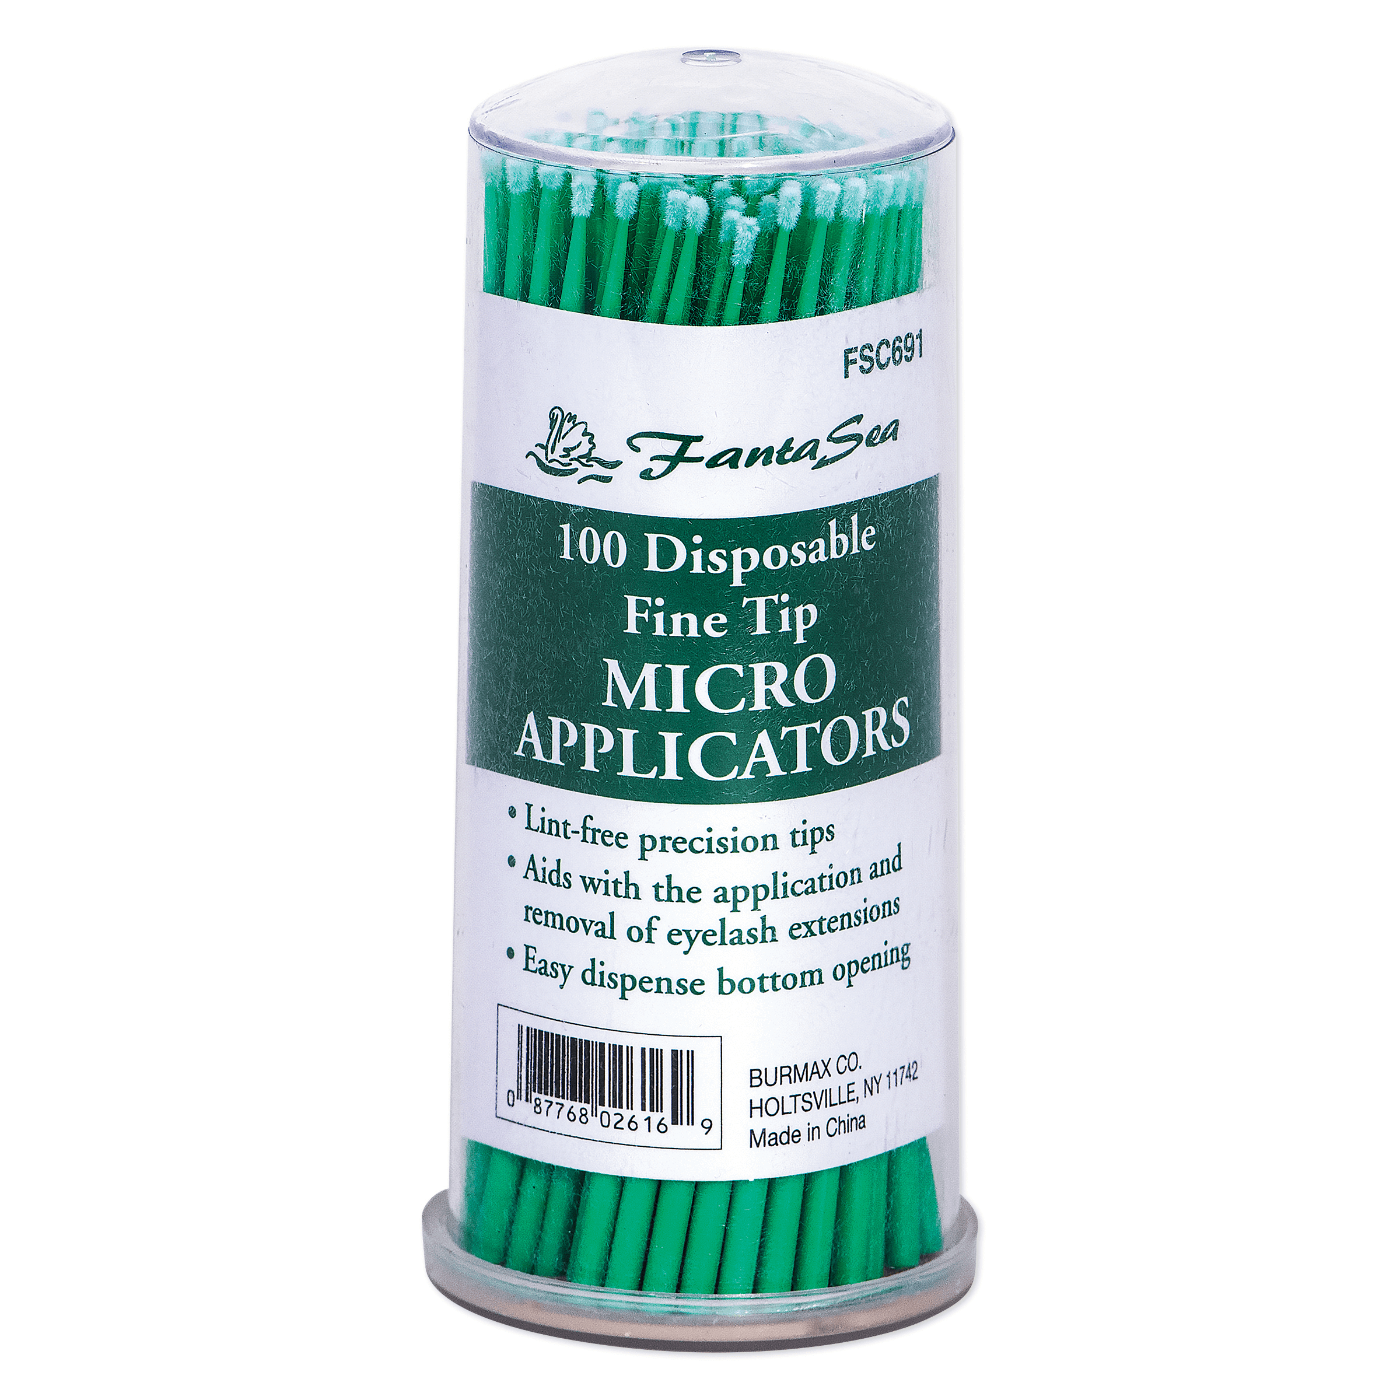 Fine Tip Micro Applicators - 100 in a container